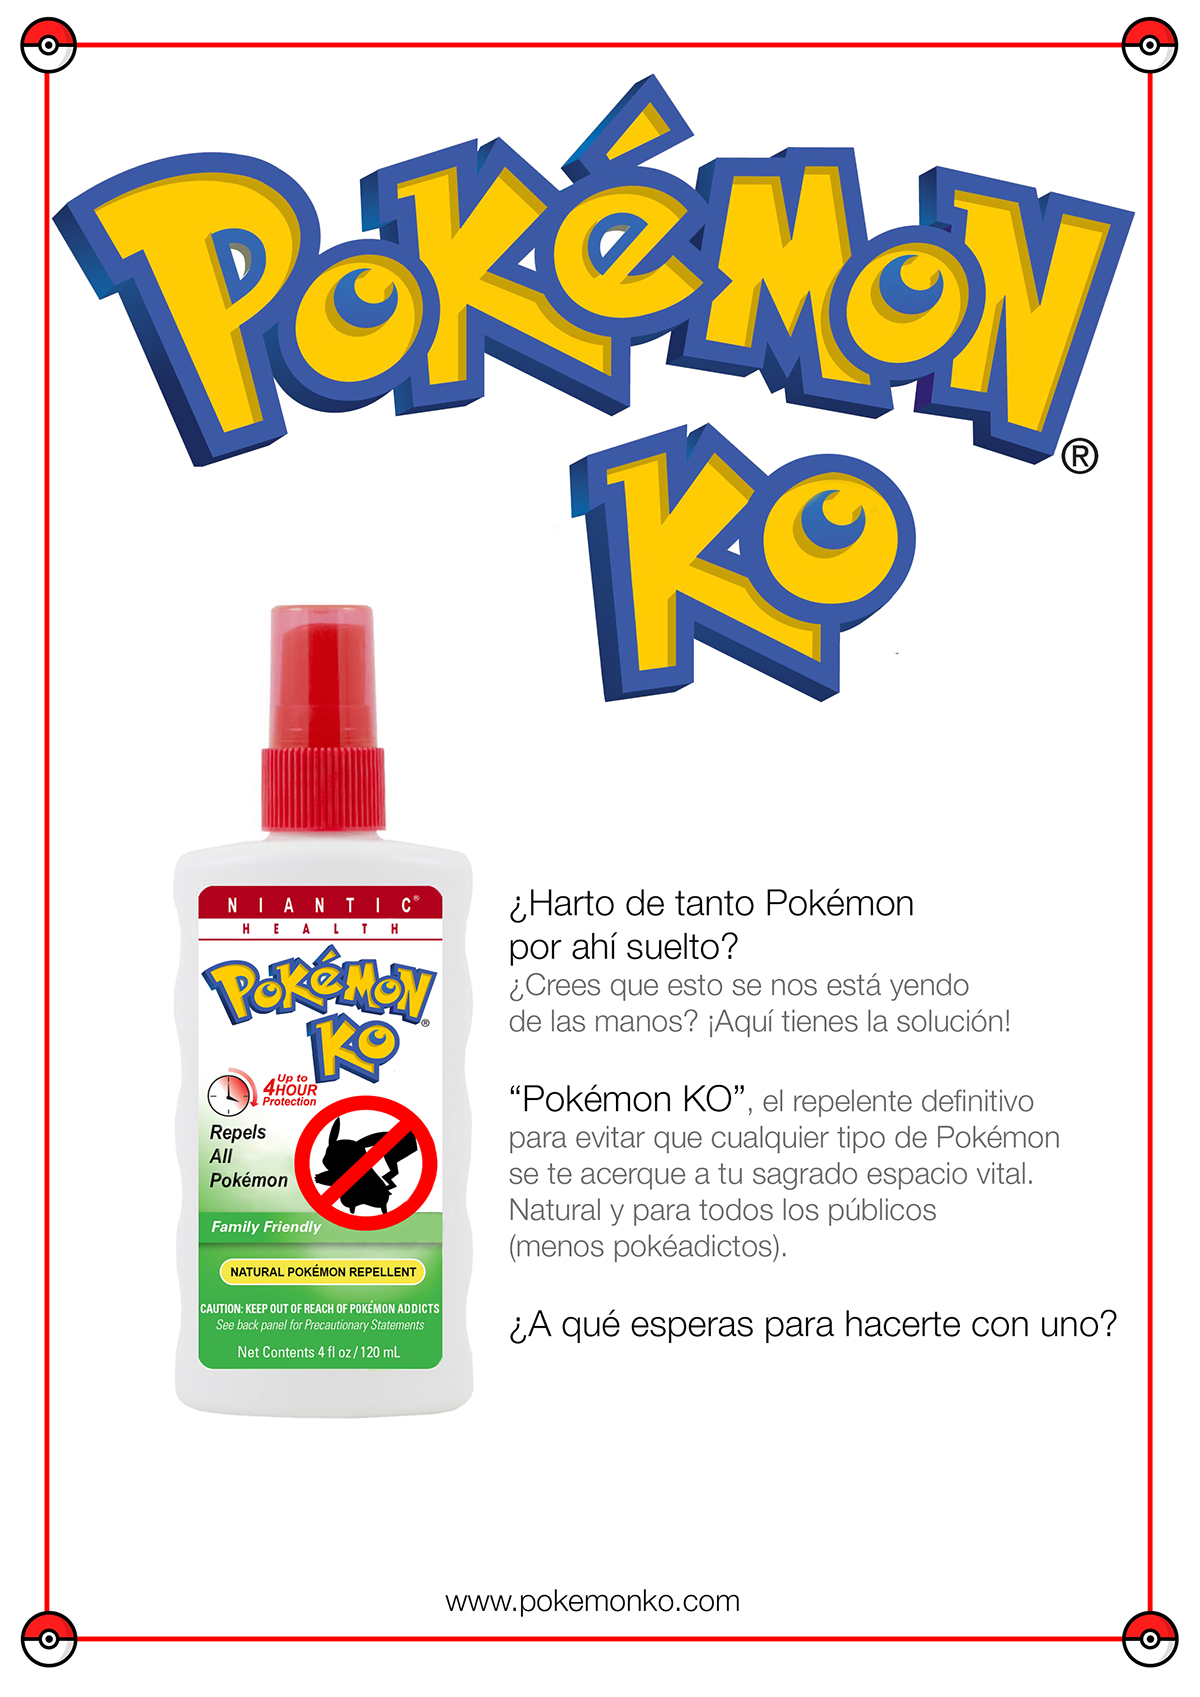 Pokemon Nintendo PokemonGO product Packaging brand design